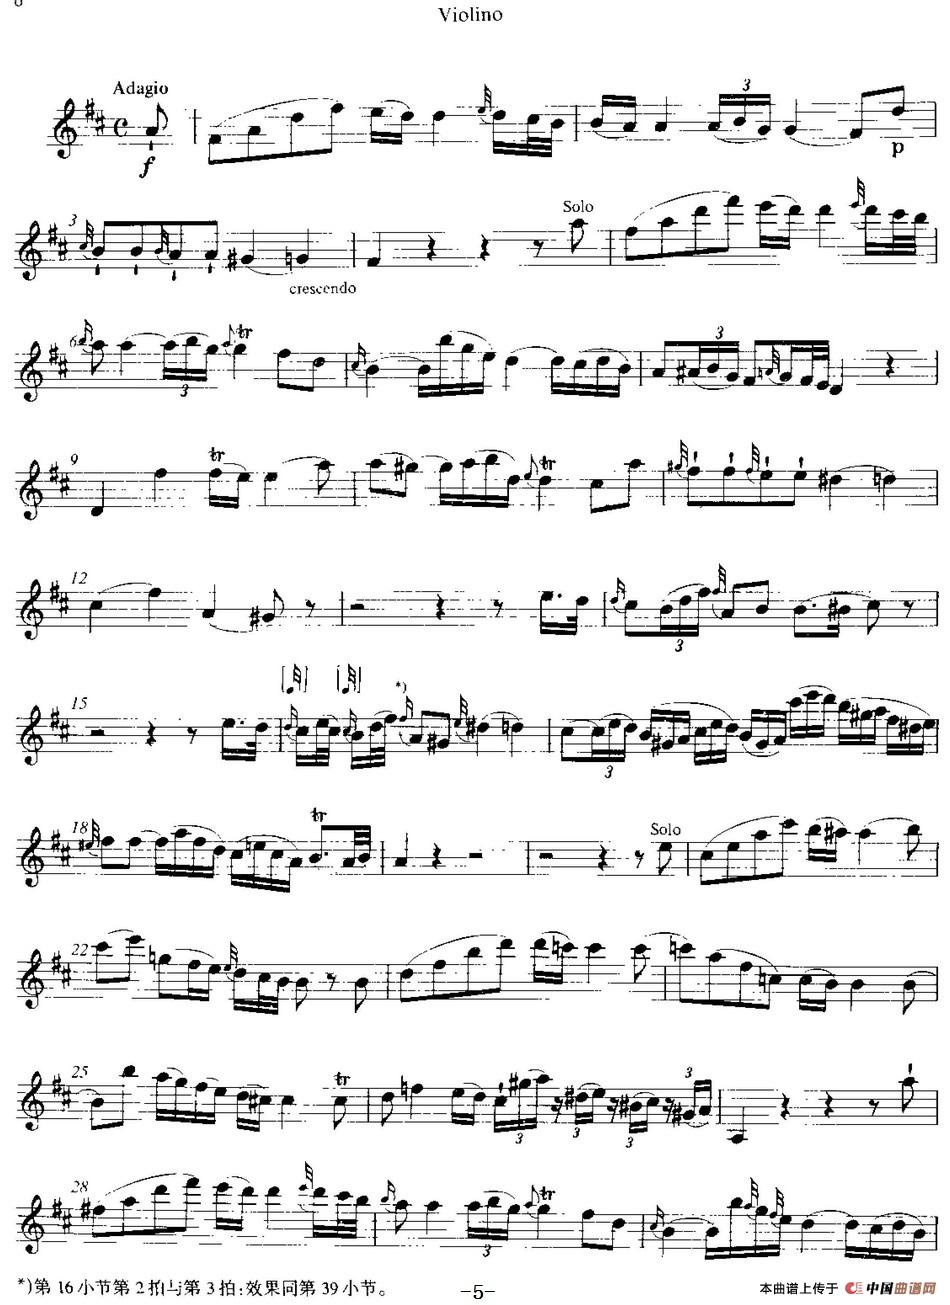 G大调第三小提琴协奏曲  KV216